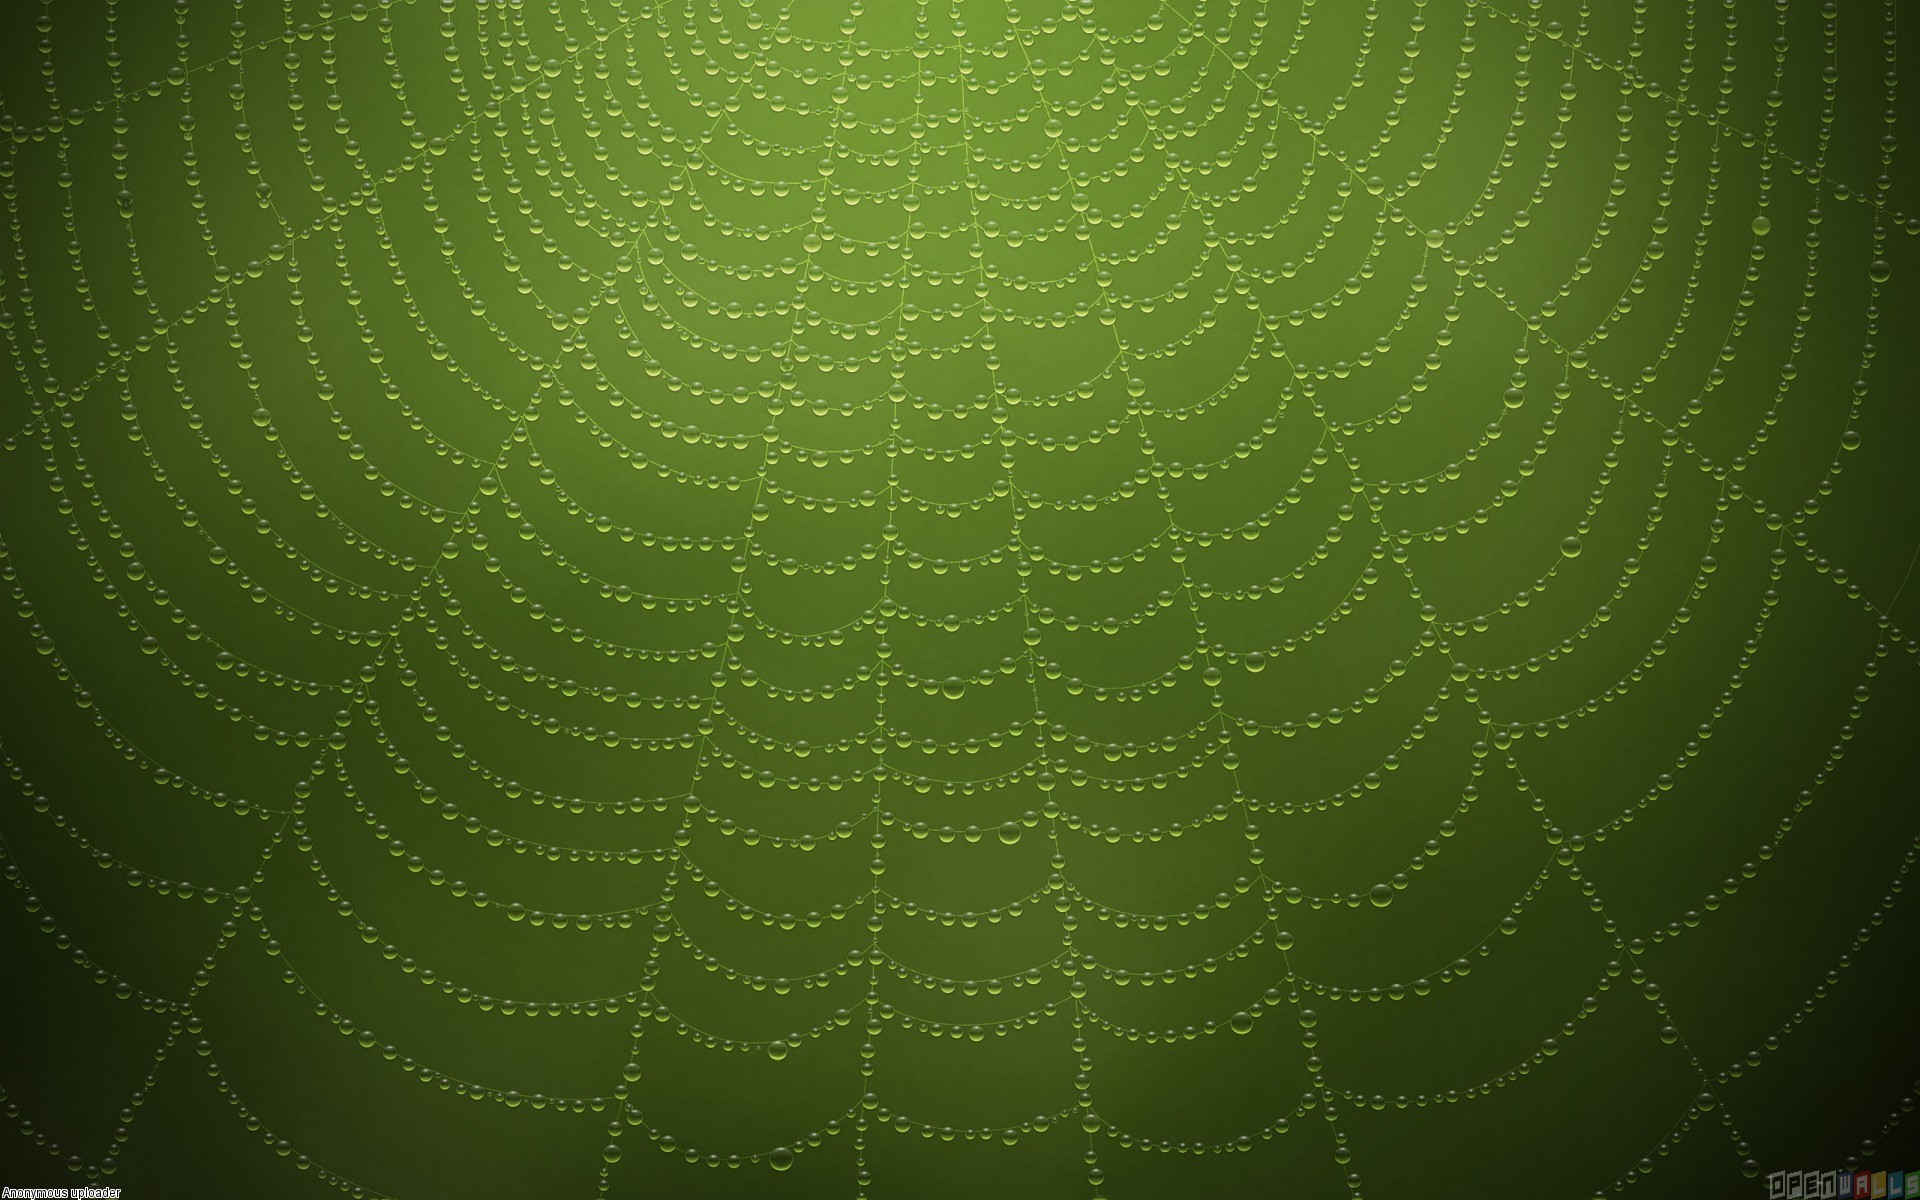 Green spider web wallpaper - Open Walls